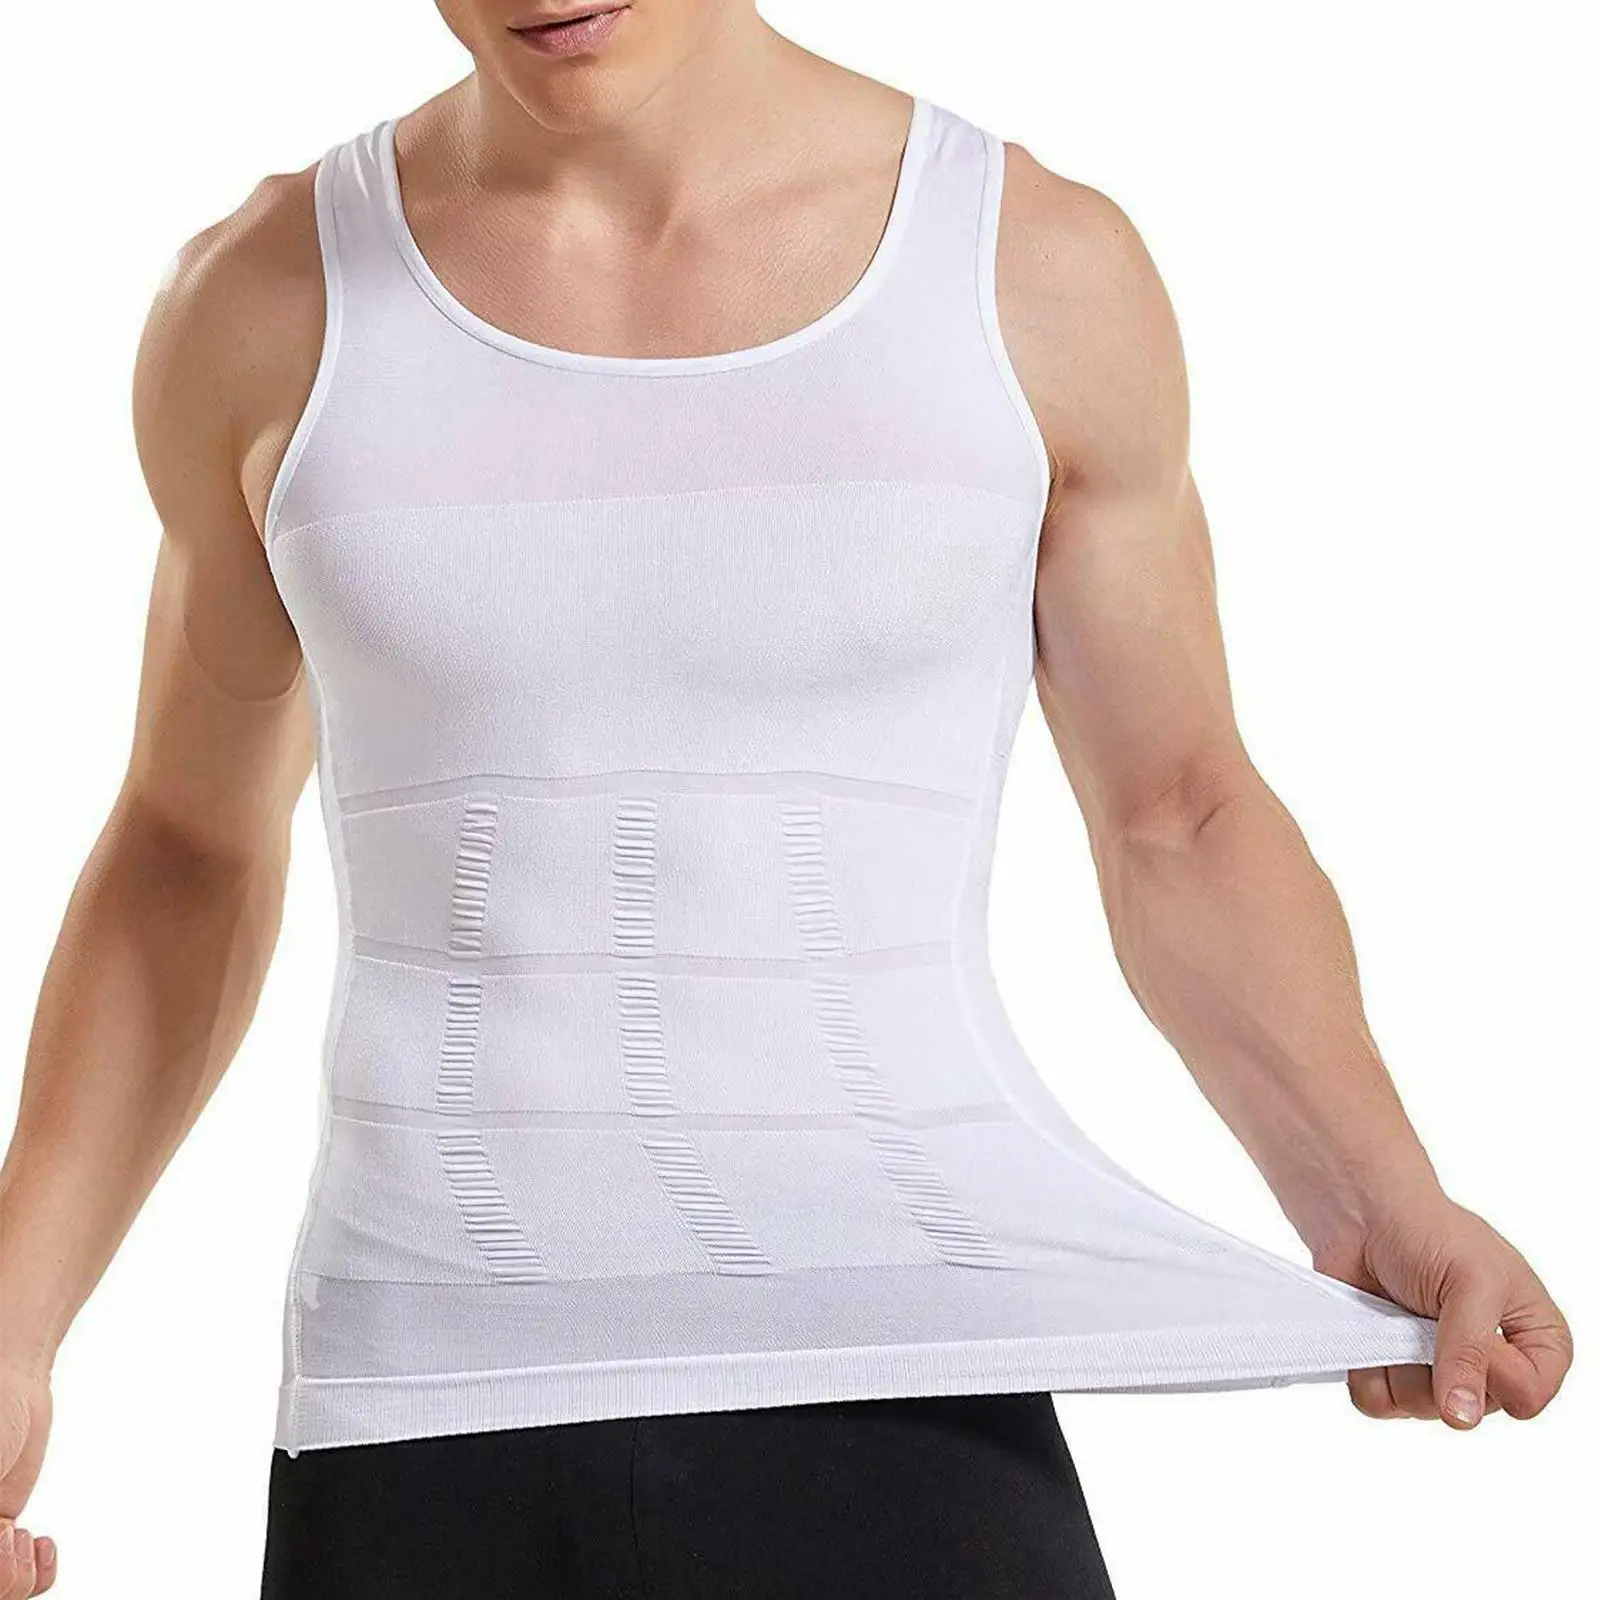 

Burning Shaper Man Shirt Man Corset Compression Reductive For Men Skinny Men Body Girdle Binder Underwear Slimming Fat Abdominal